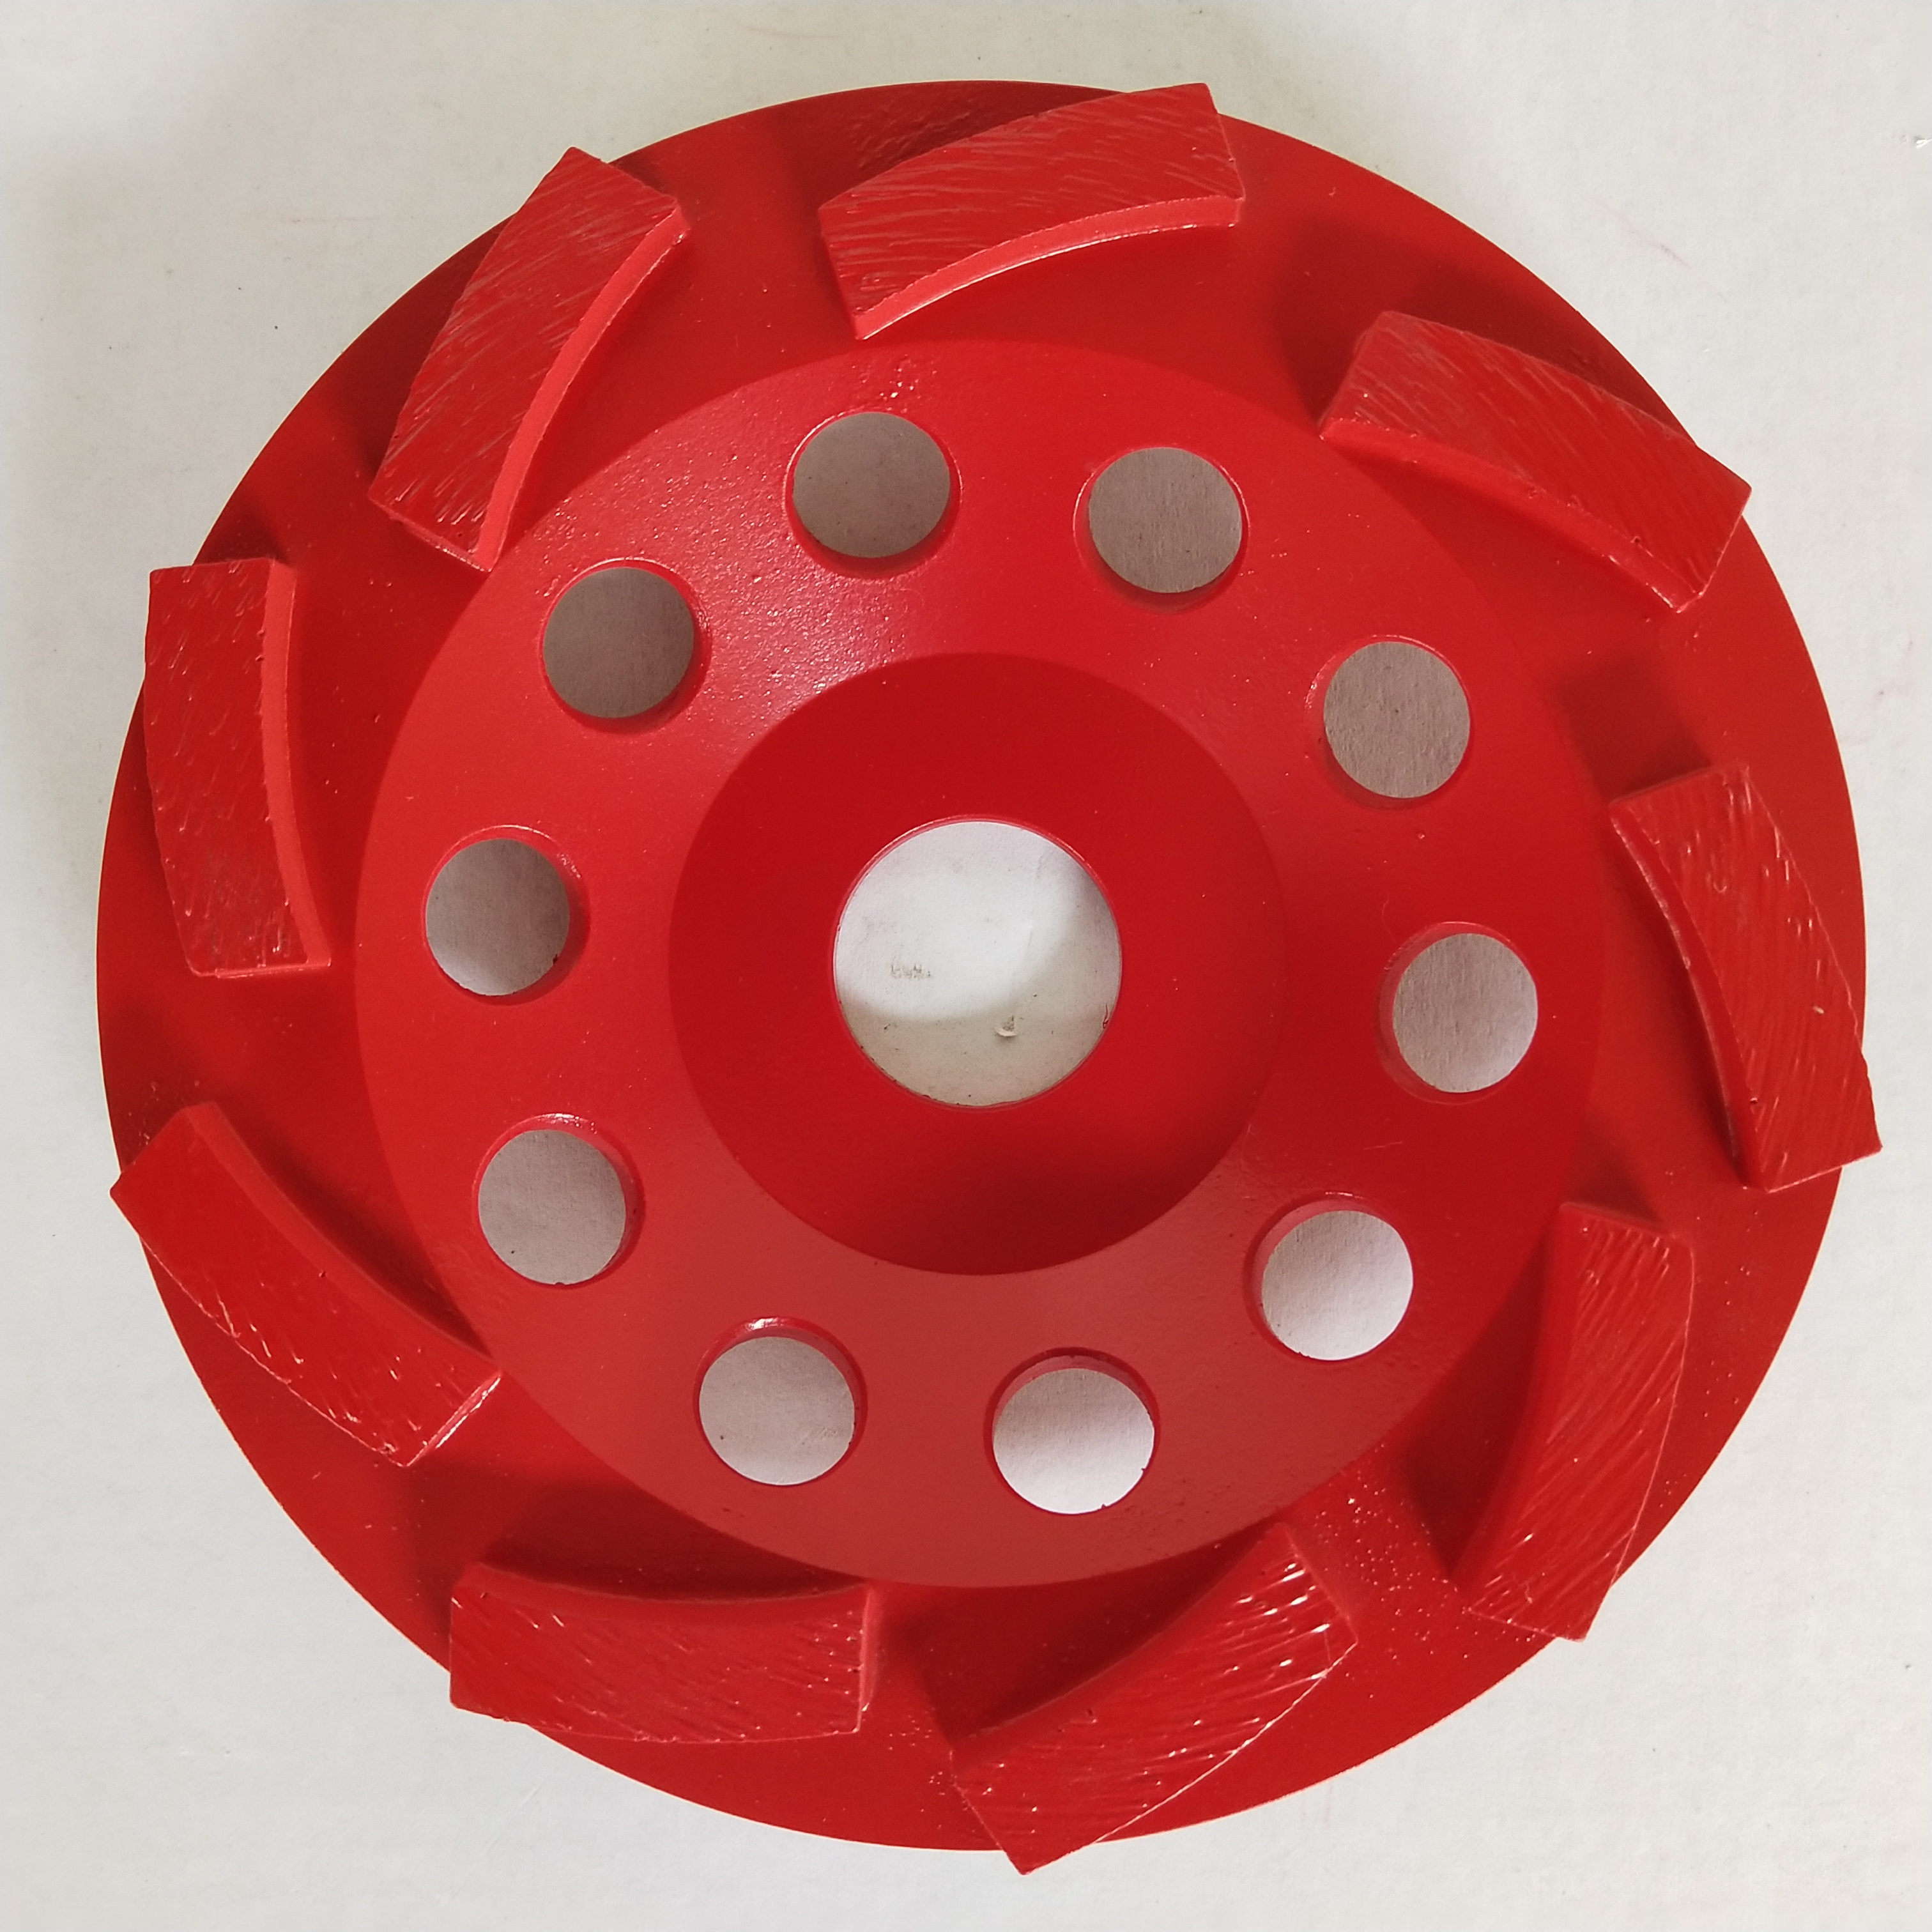 7" Diamond Abrasive Wheel for Edging Concrete Turbo Segmented Hand Grinding Cup Wheels with 24nos Segment.